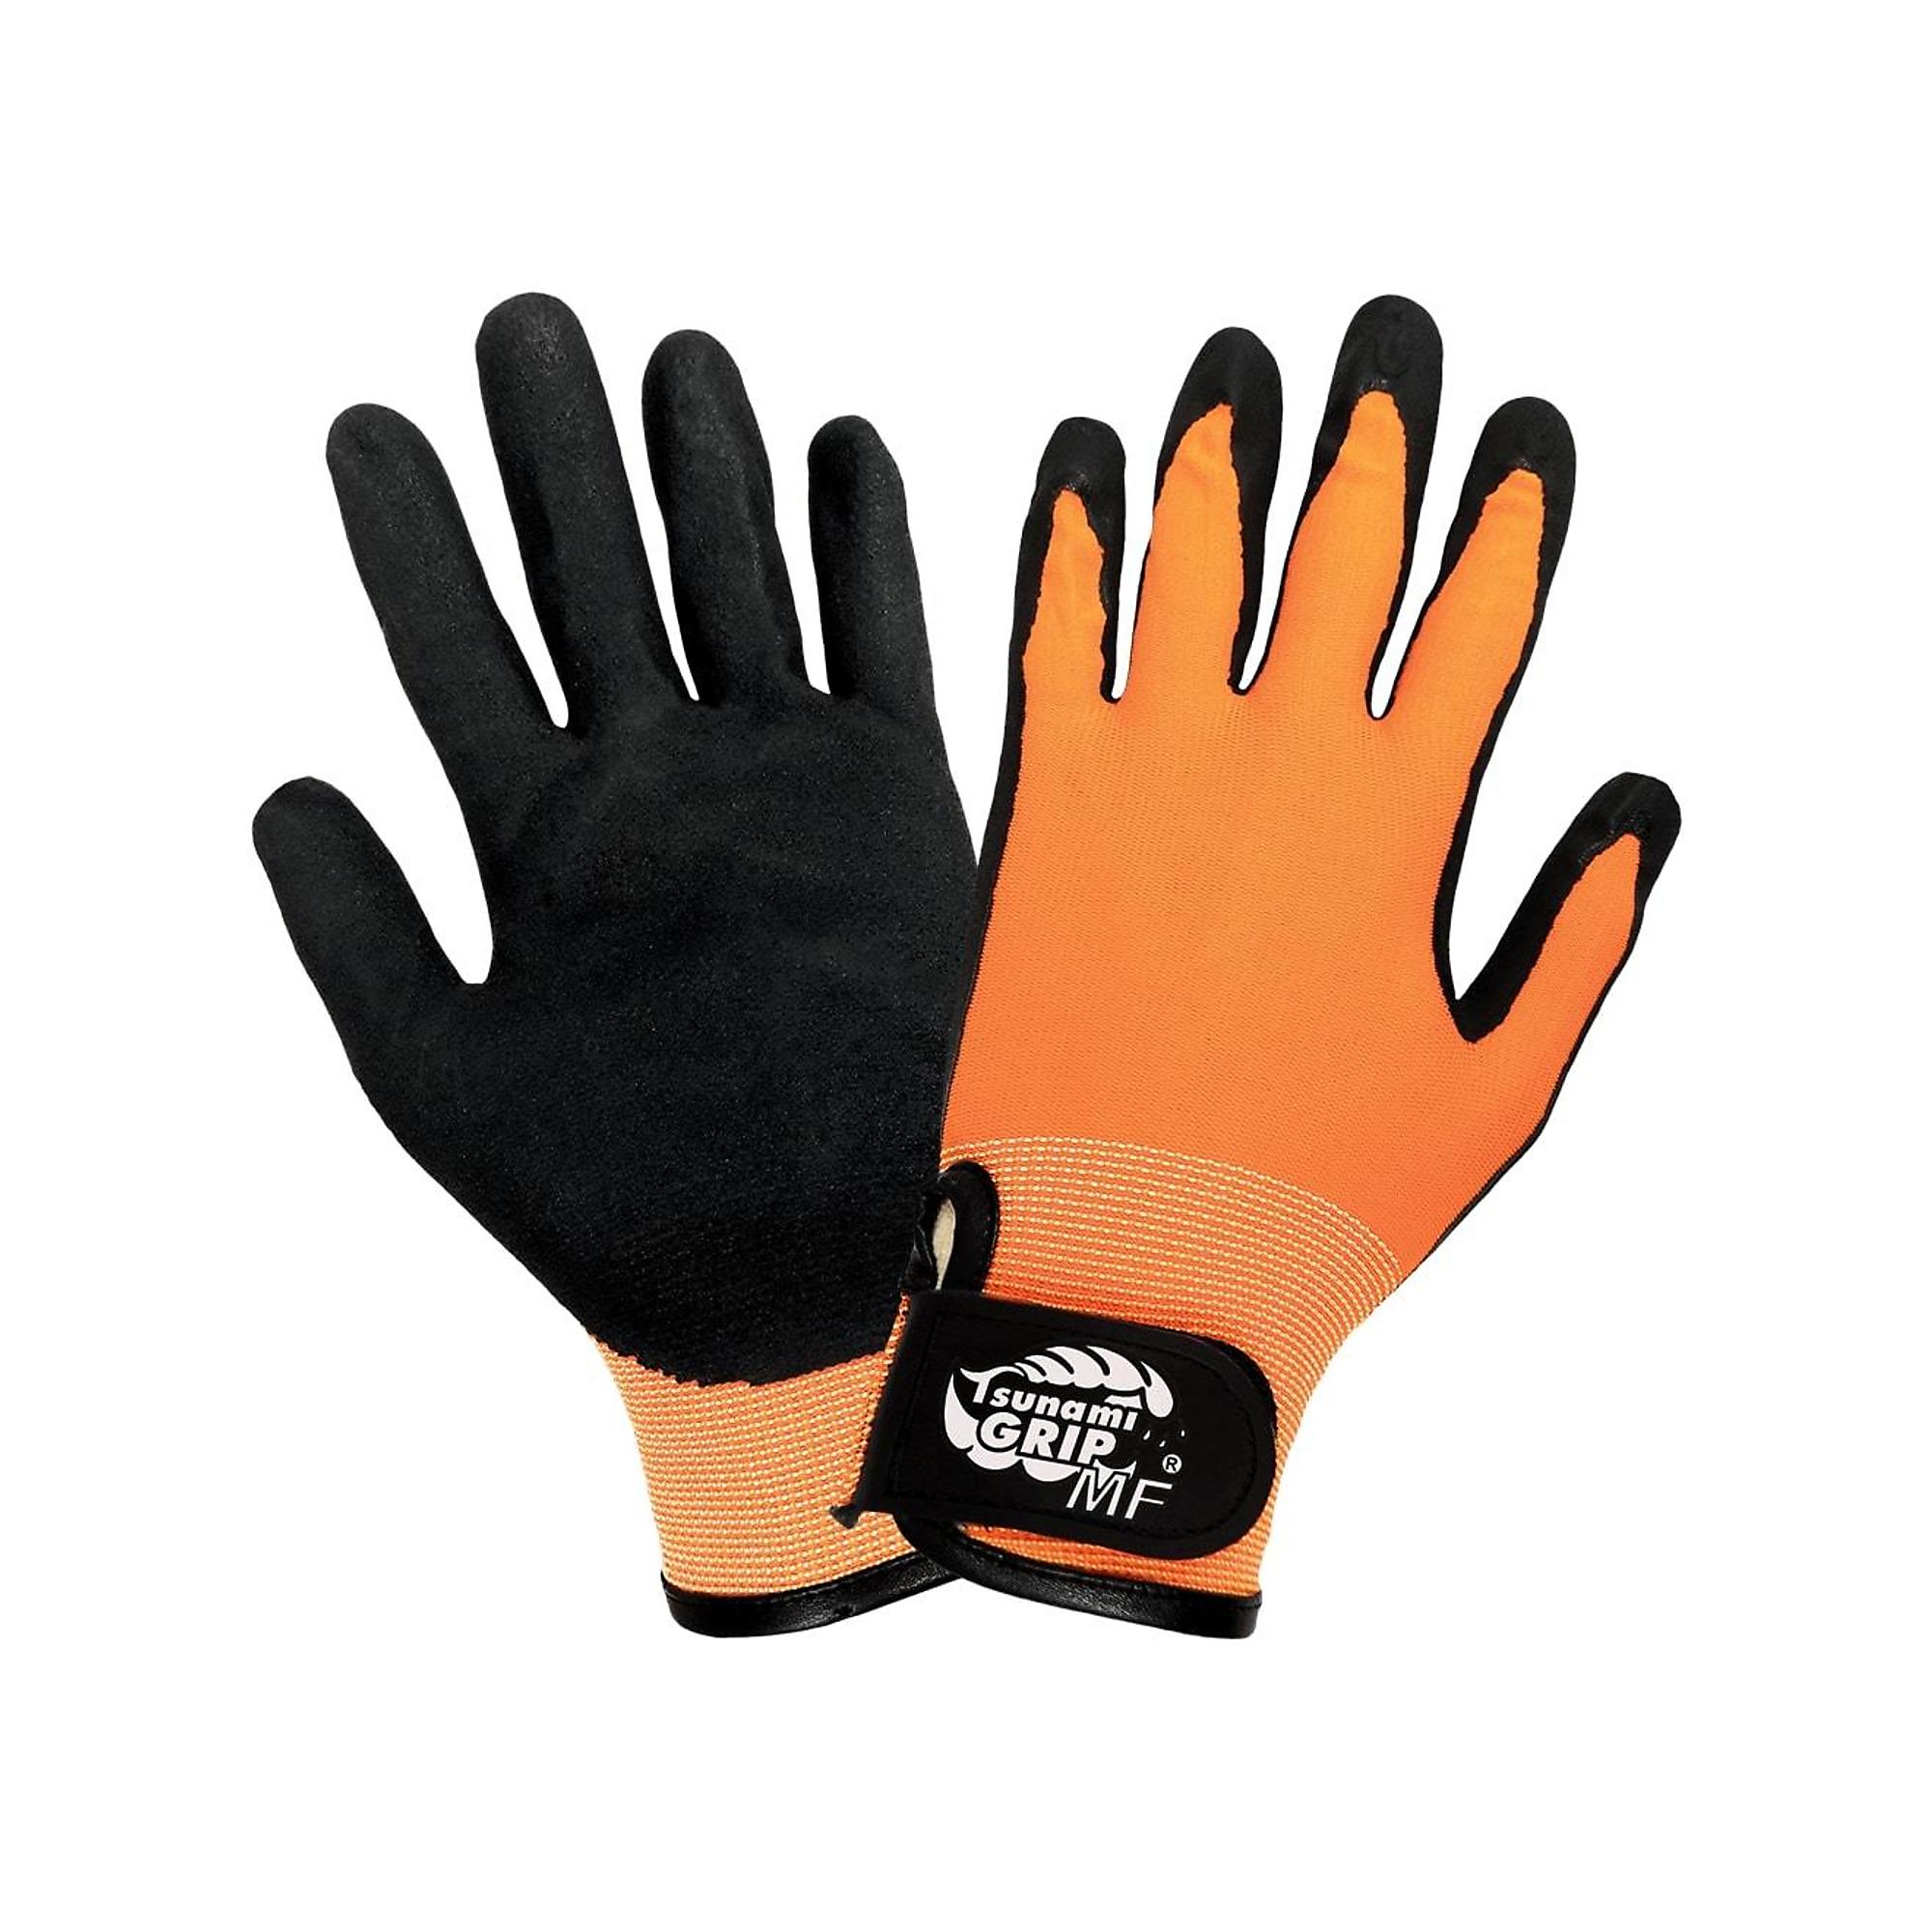 Global Glove Tsunami Grip , MF HV Mach Finish Nitrile Palm Coated Gloves, Size XL, Color High-Visibility Orange/Black, Included (qty.) 12 Model 510MFV